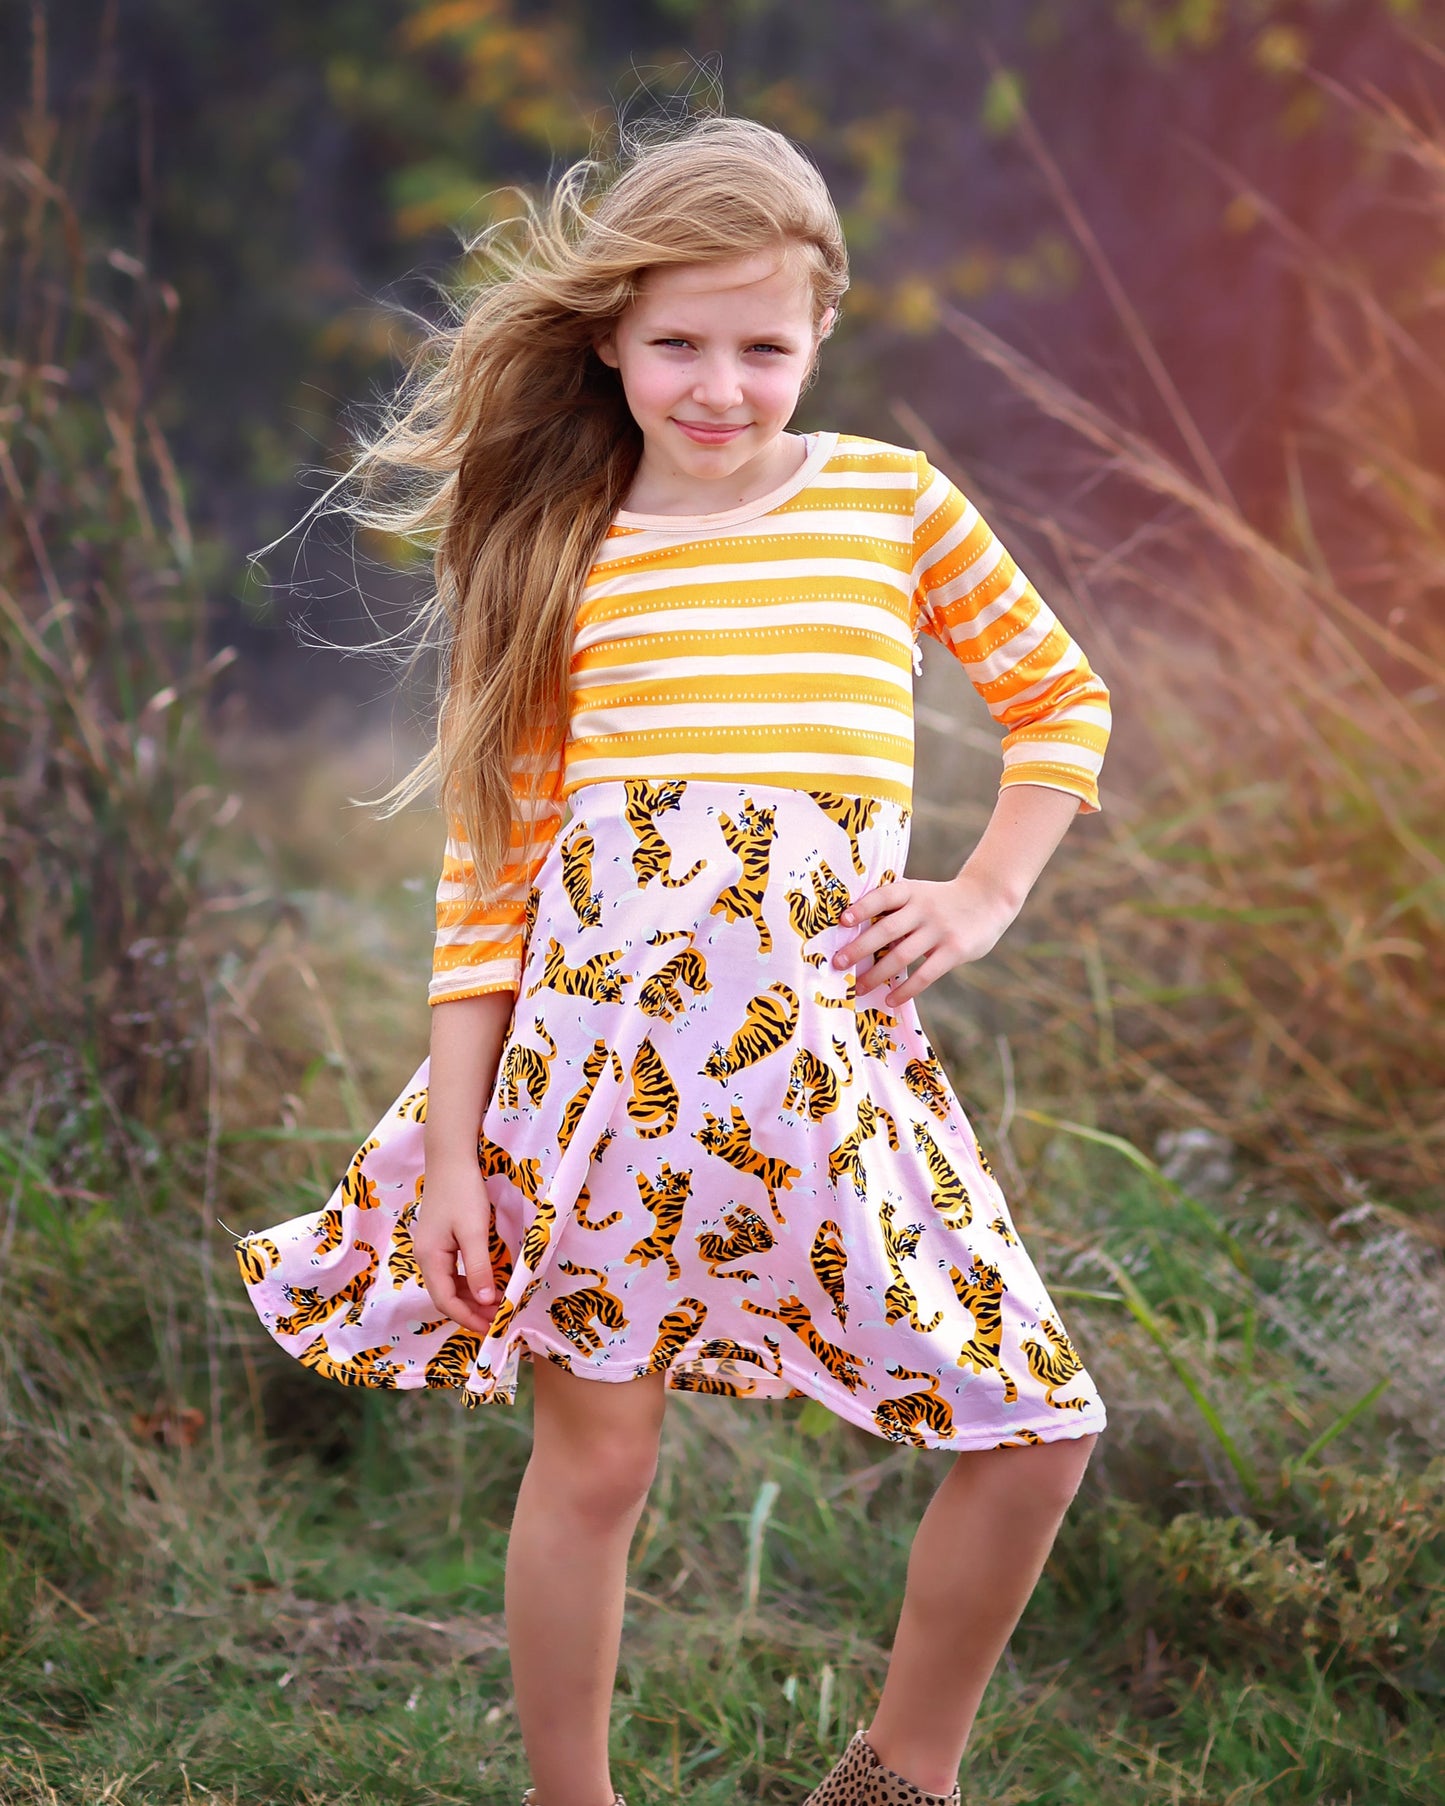 A-Line Dress - Girls Dress - Twirly Dress - Birthday Dress - Party Dress - Pink and Orange Tiger Dress